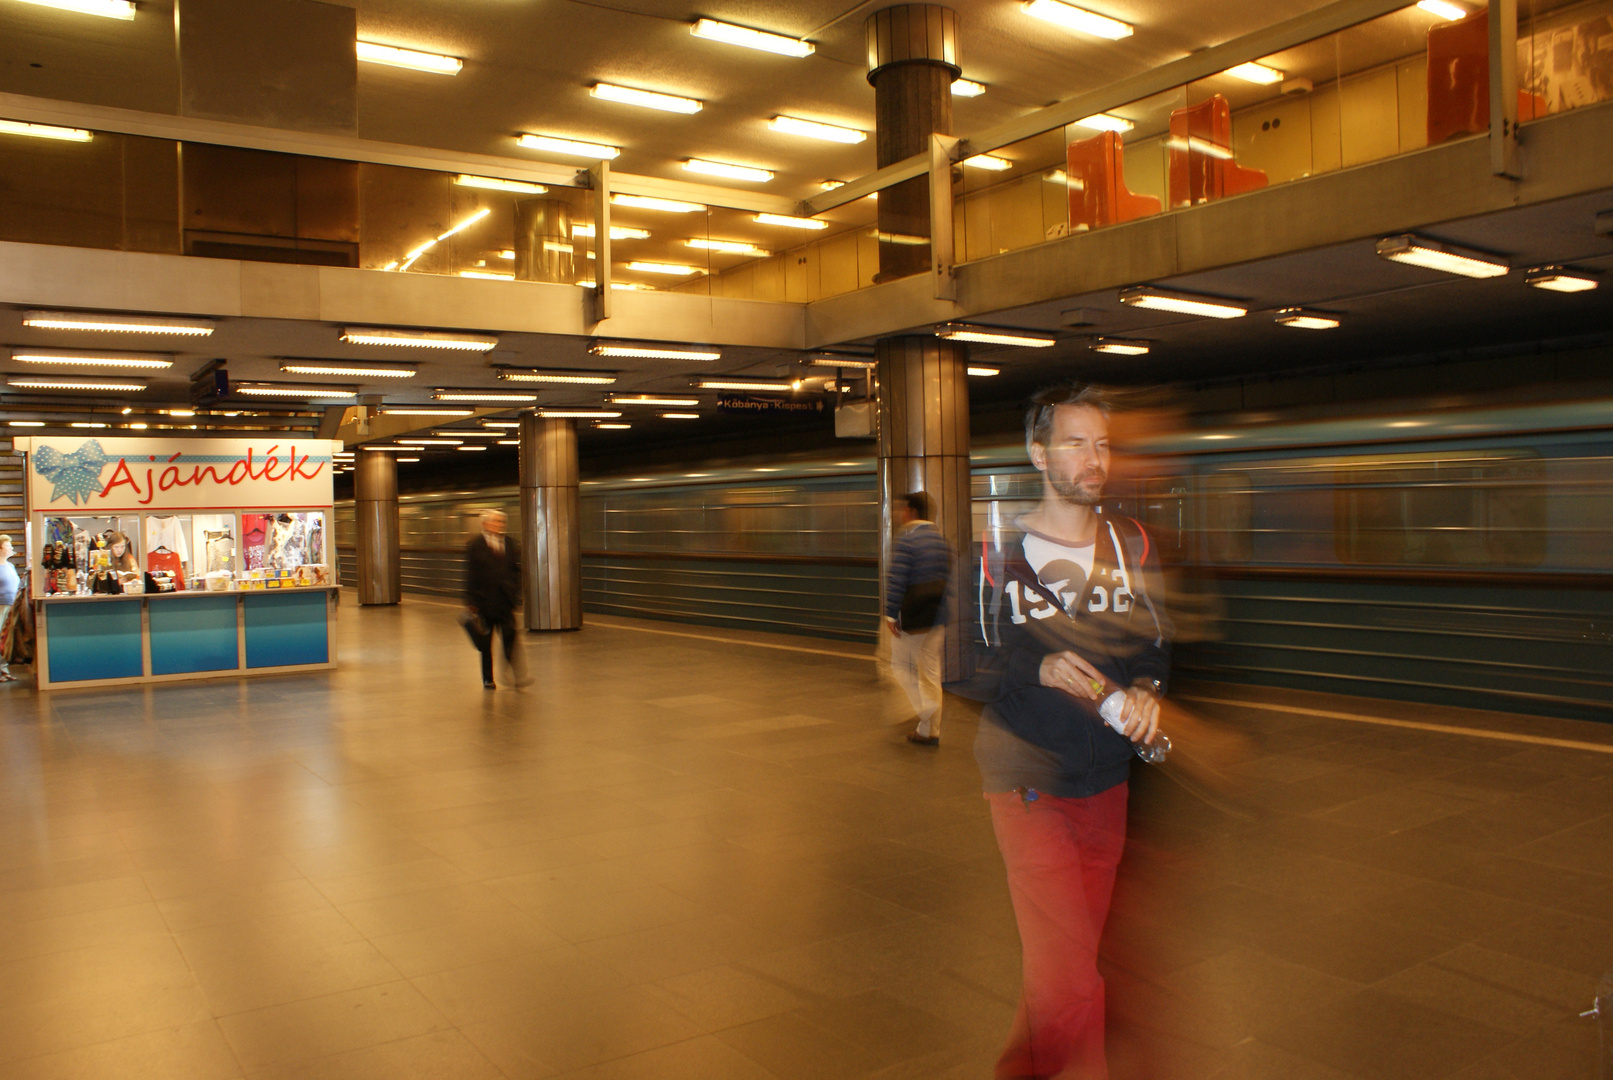 U-Bahn Station Budapest